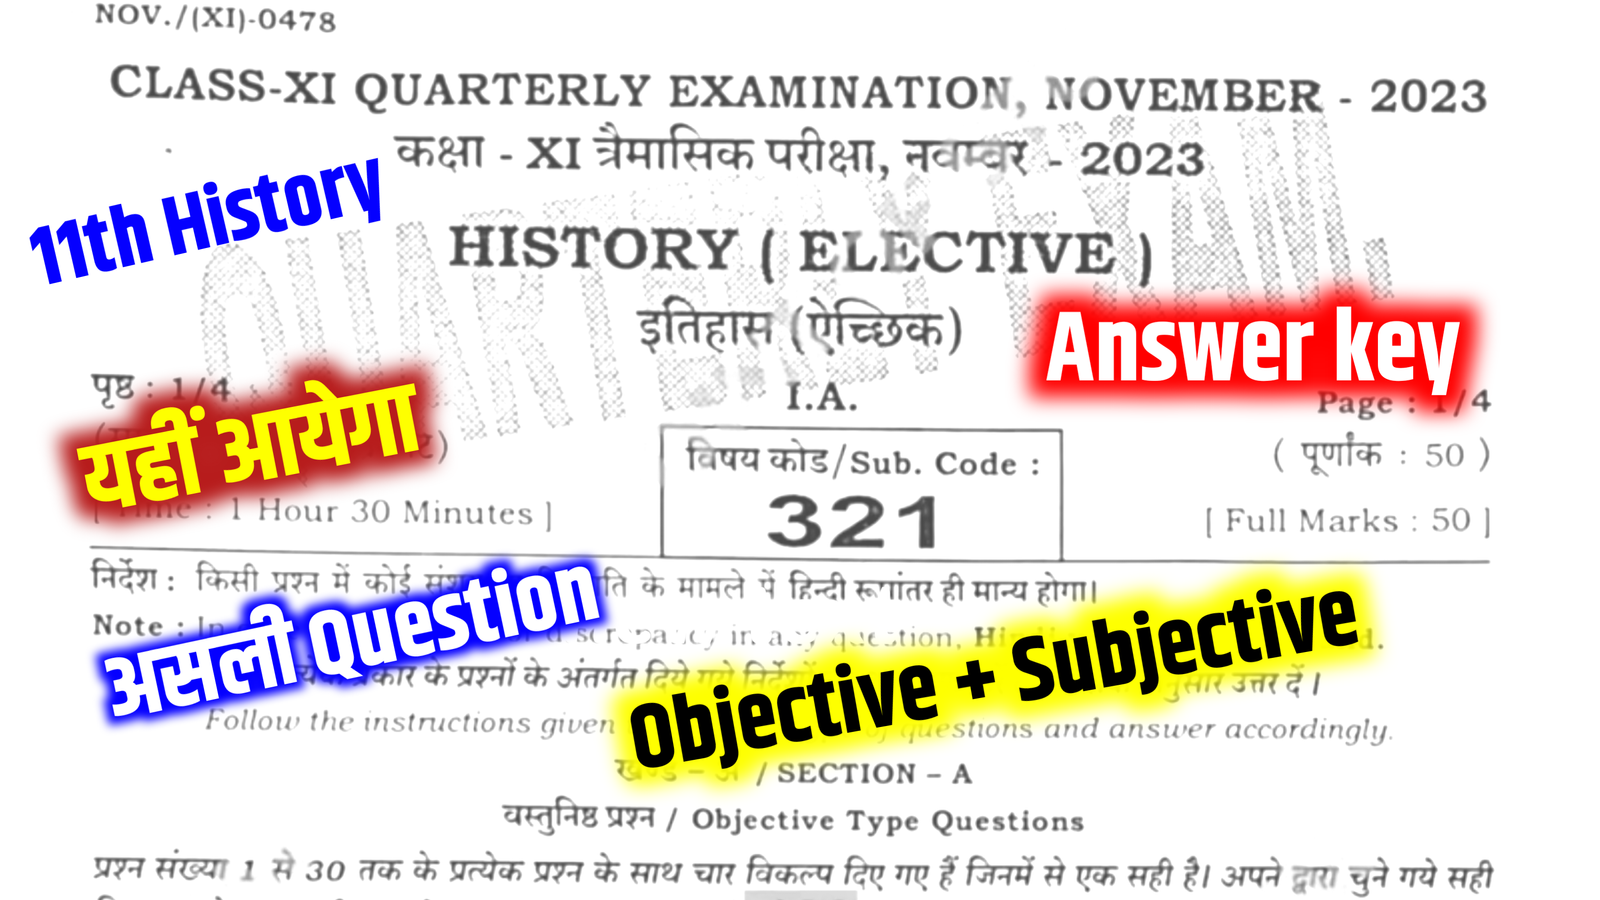 Bihar Board 11th History Objective Subjective: